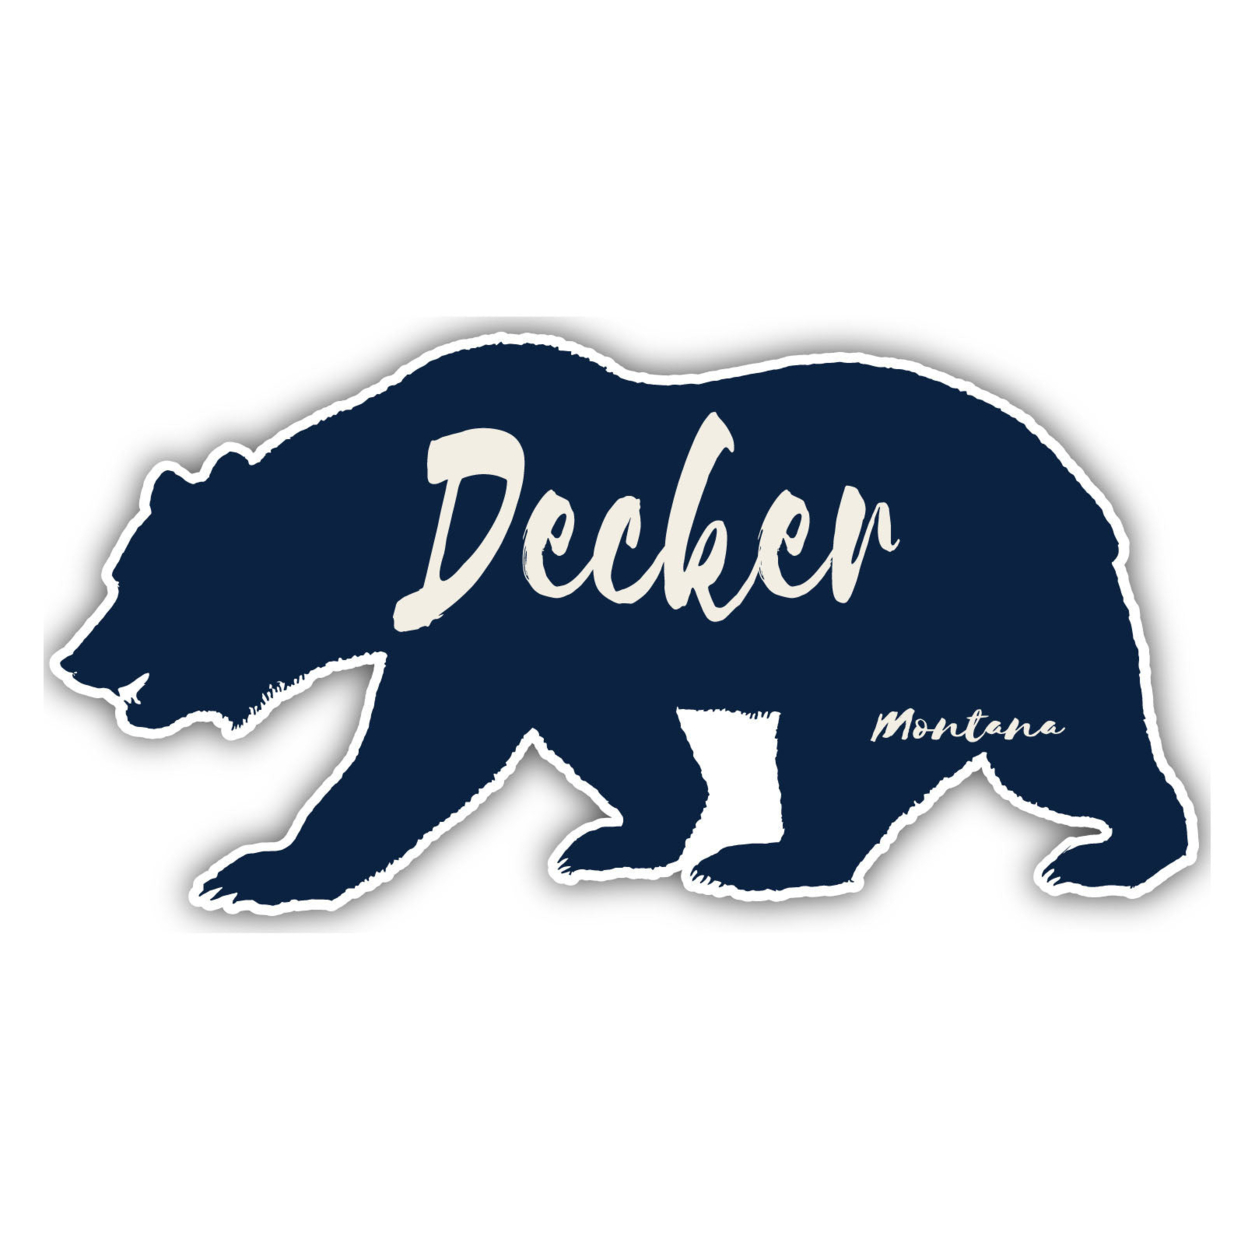 Decker Montana Souvenir Decorative Stickers (Choose Theme And Size) - 4-Pack, 10-Inch, Bear